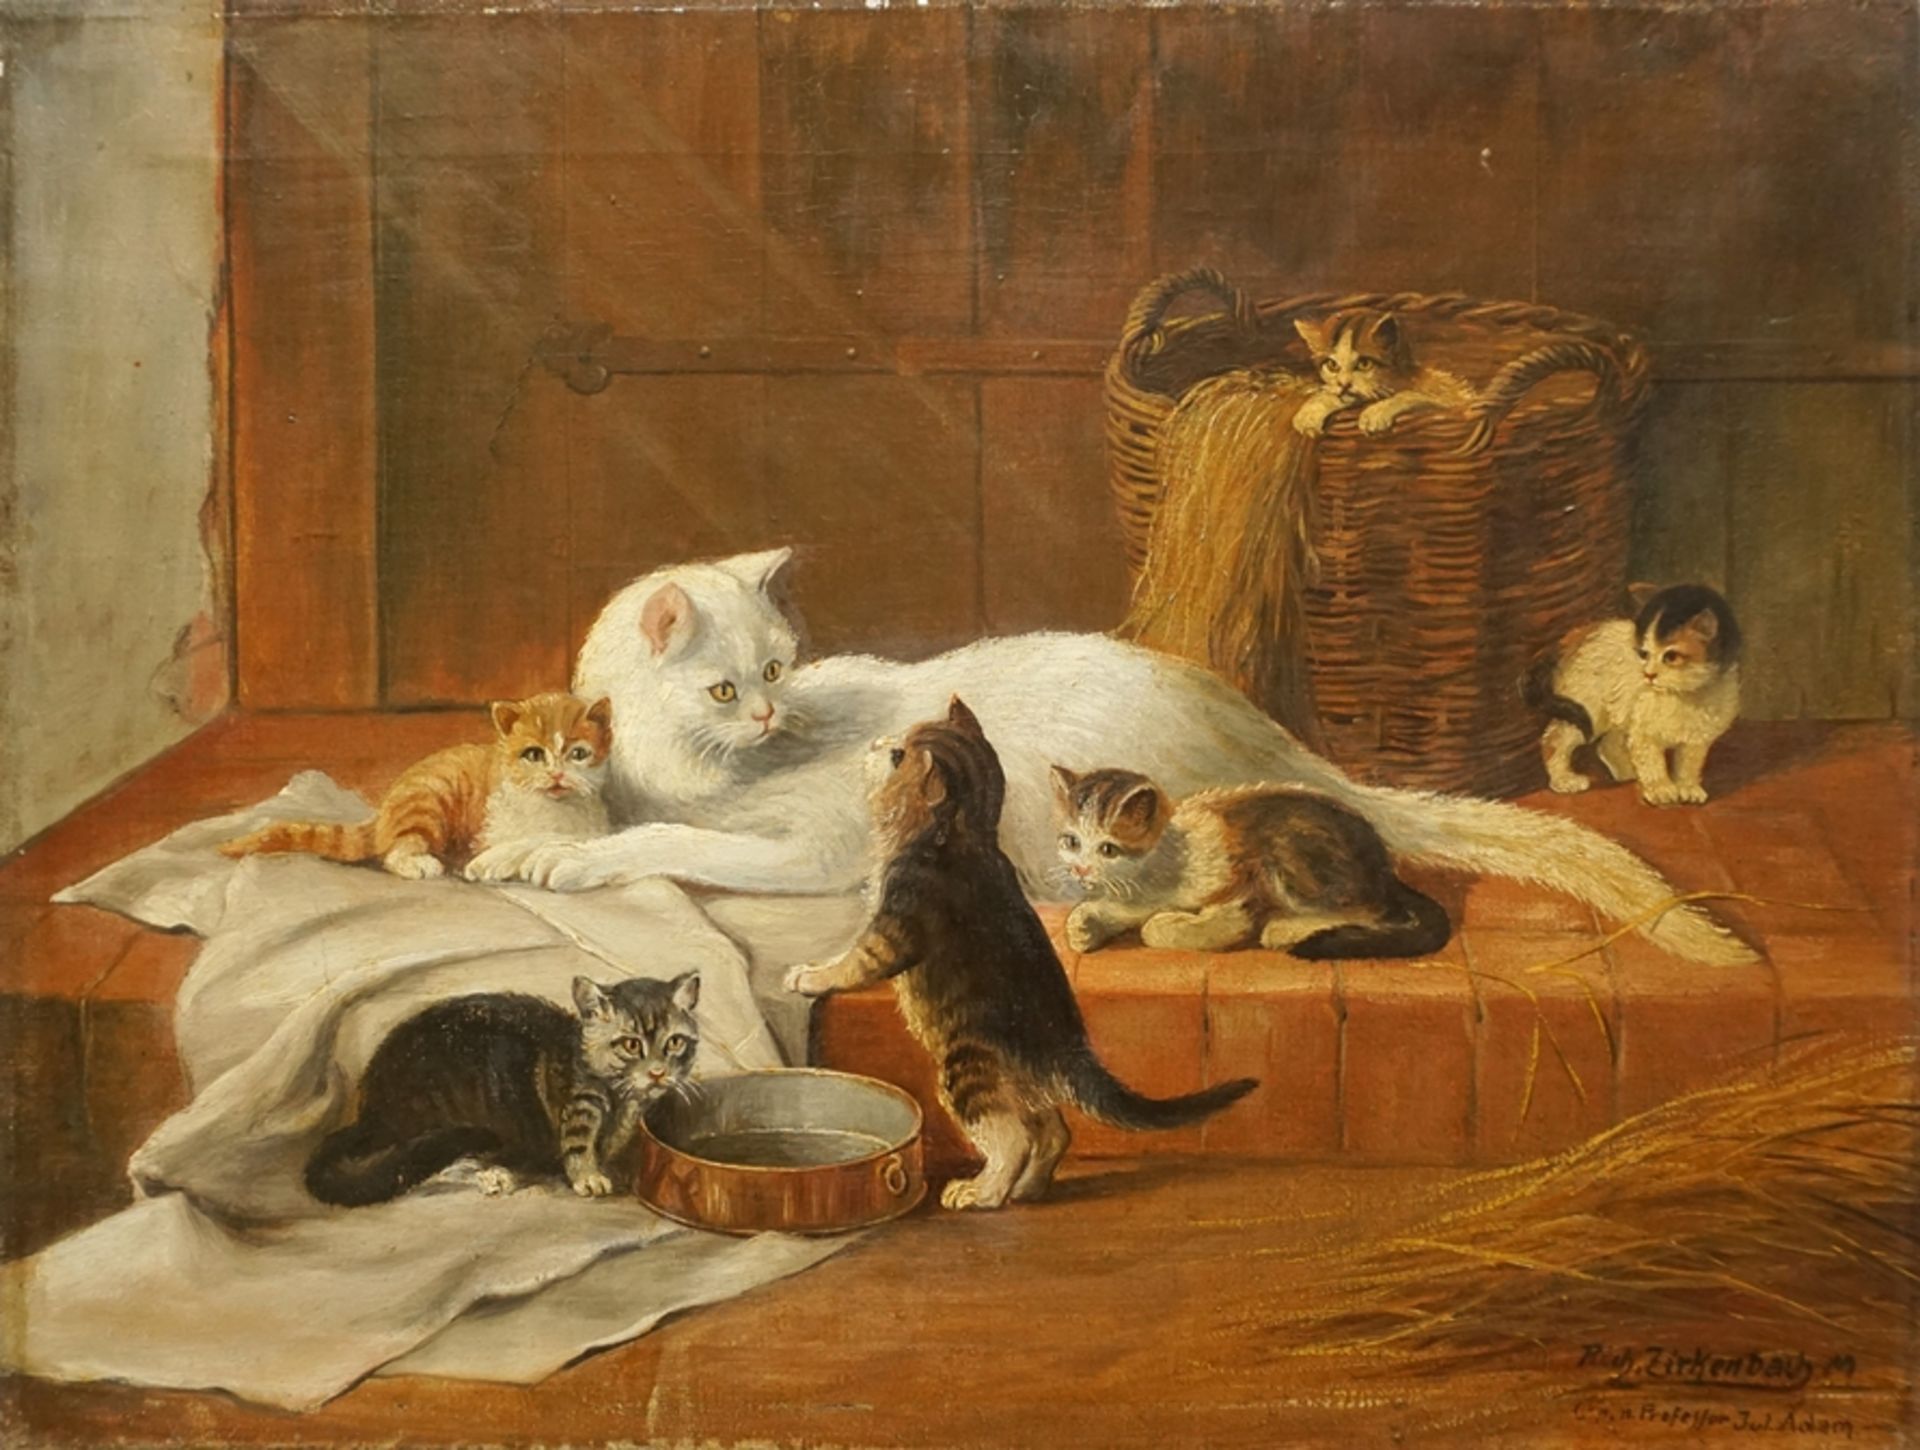 Richard Zirkenbach (Magdeburg painter of the 20th century), "Cat family", 1st half 20th century, oi